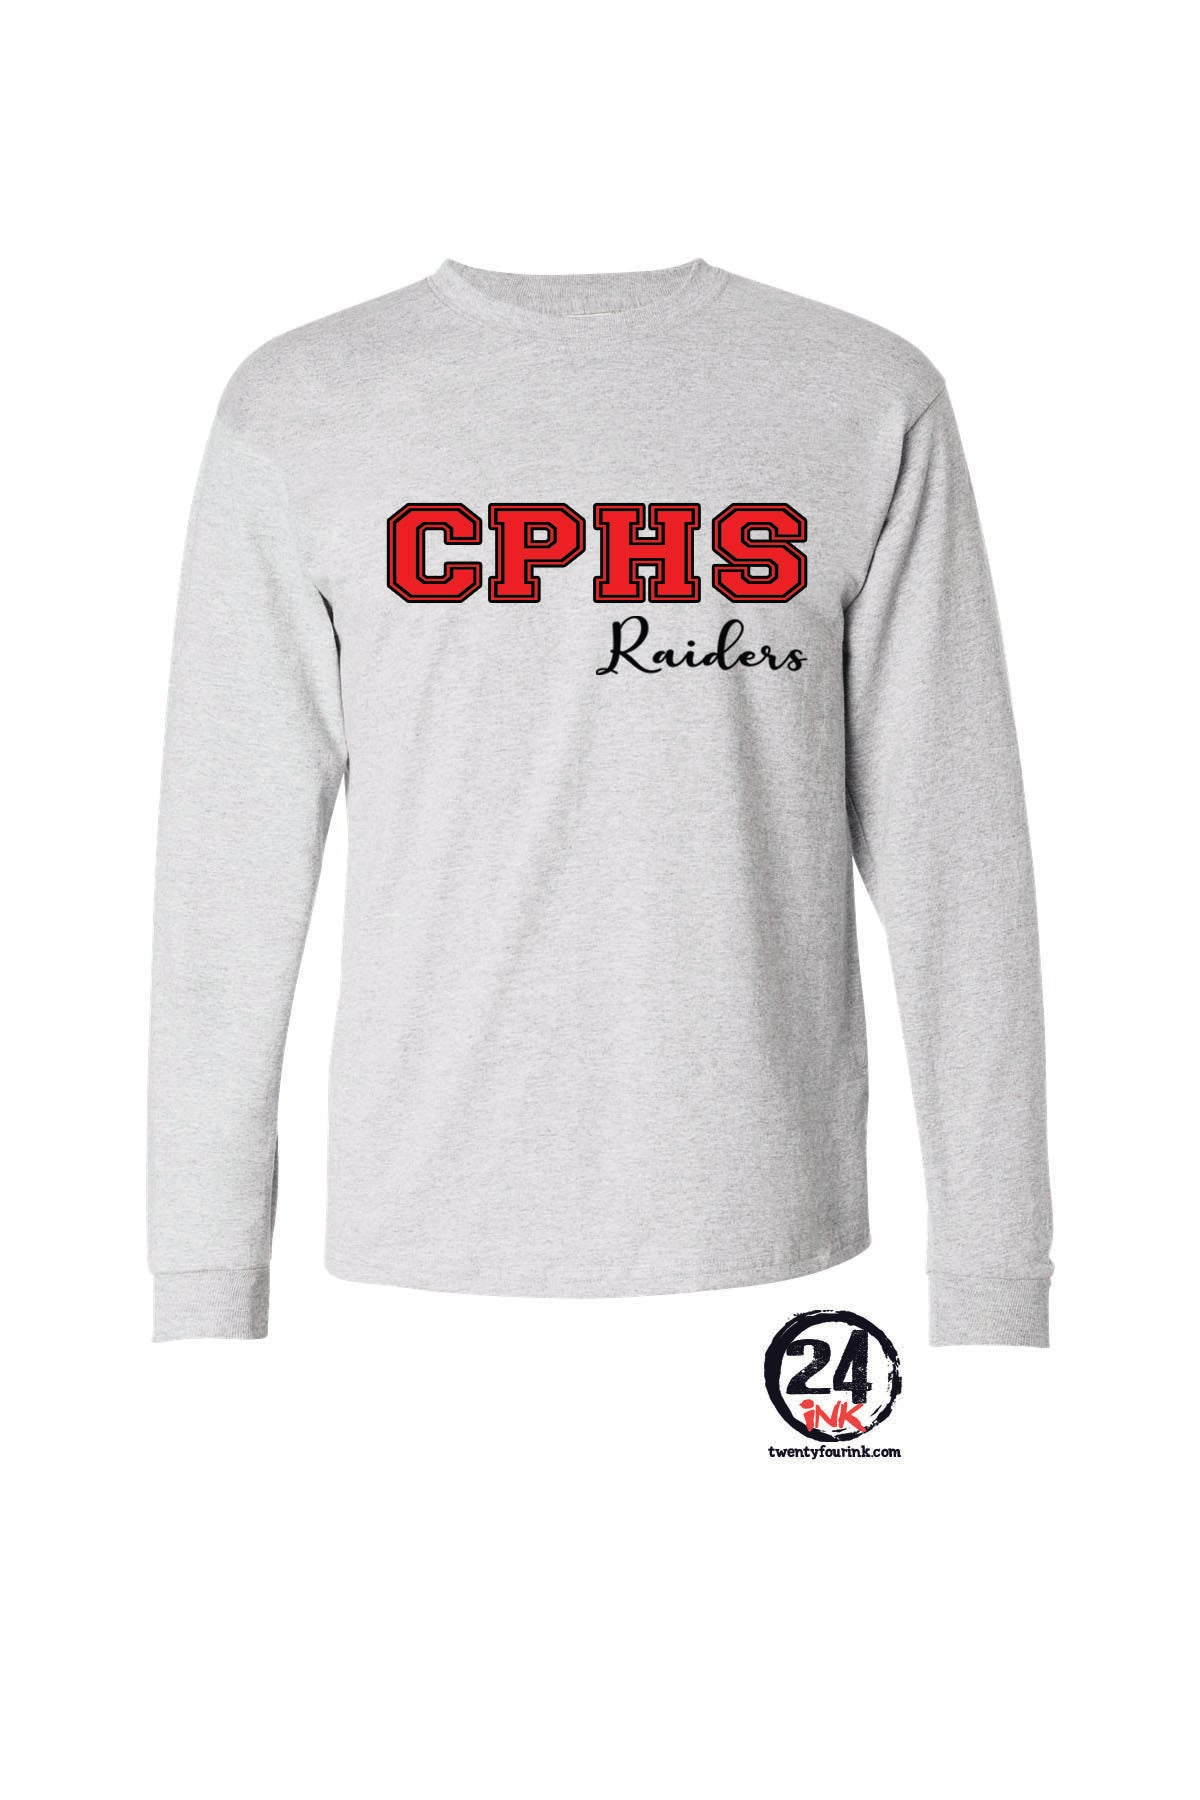 CPHS Long Sleeve Shirt